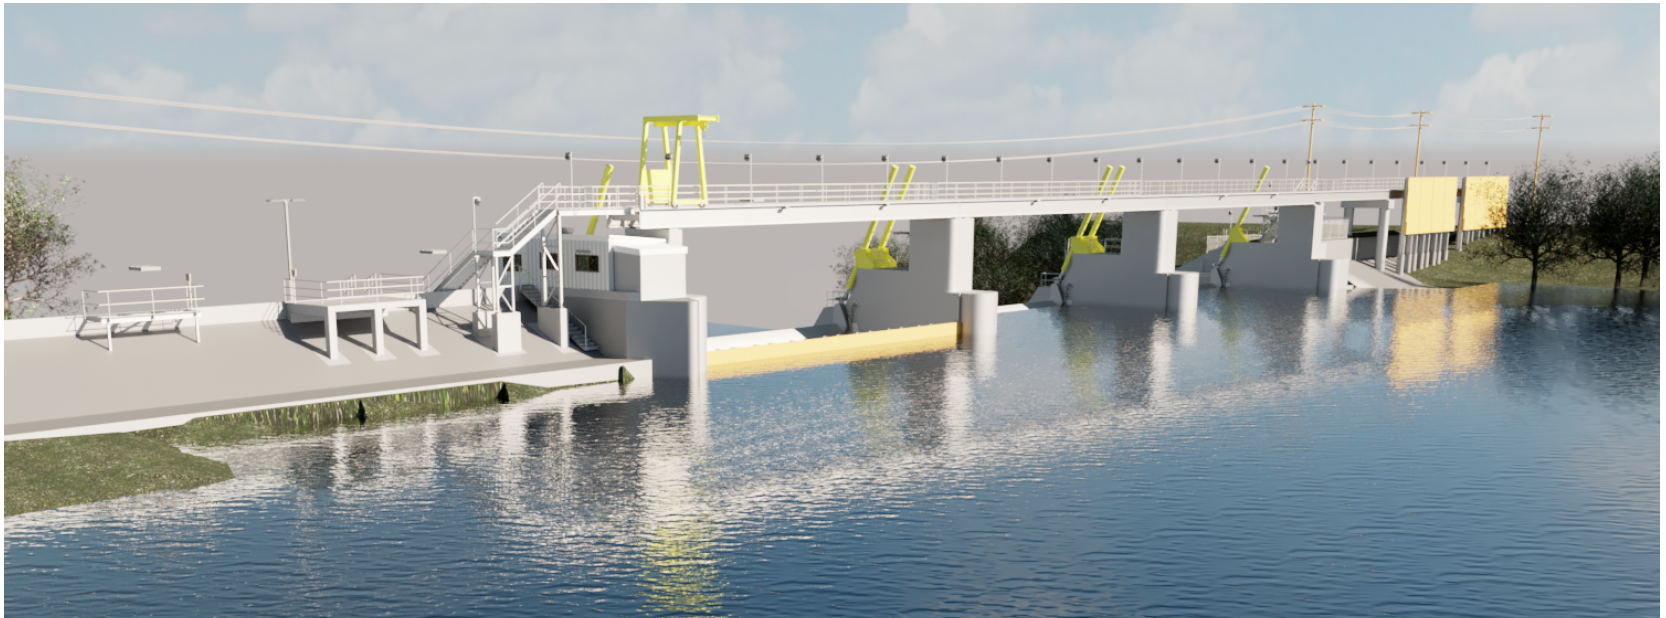 New Lake Dunlap Dam Design - Hydraulic Crest Gates